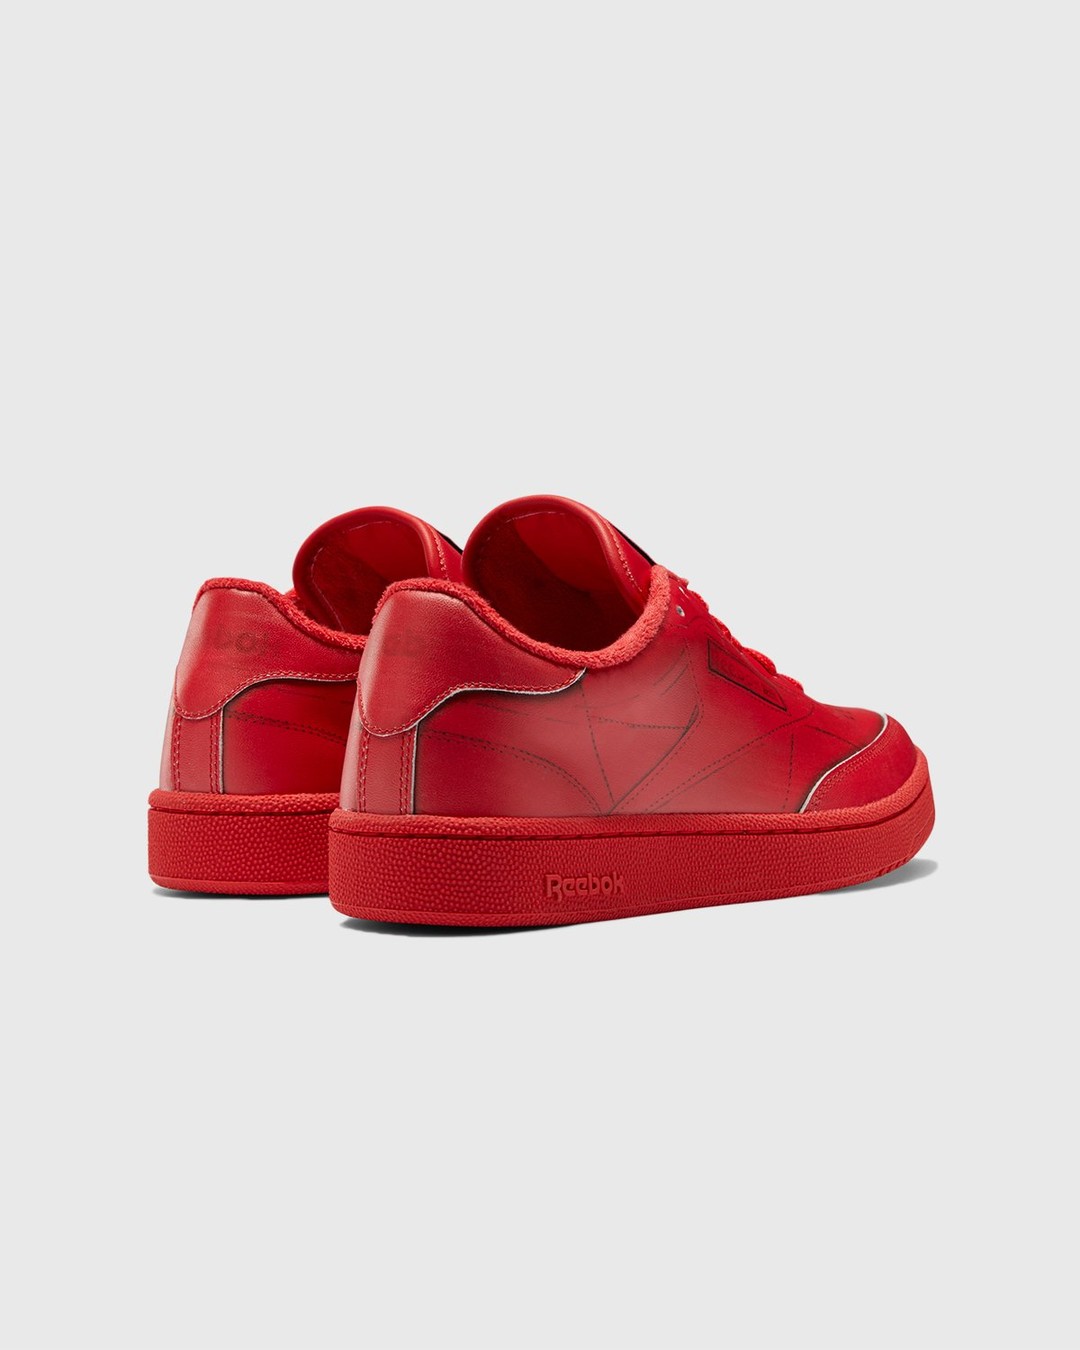 Maison Margiela x Reebok – Club C Trompe L’Oeil Red - Sneakers - Red - Image 3